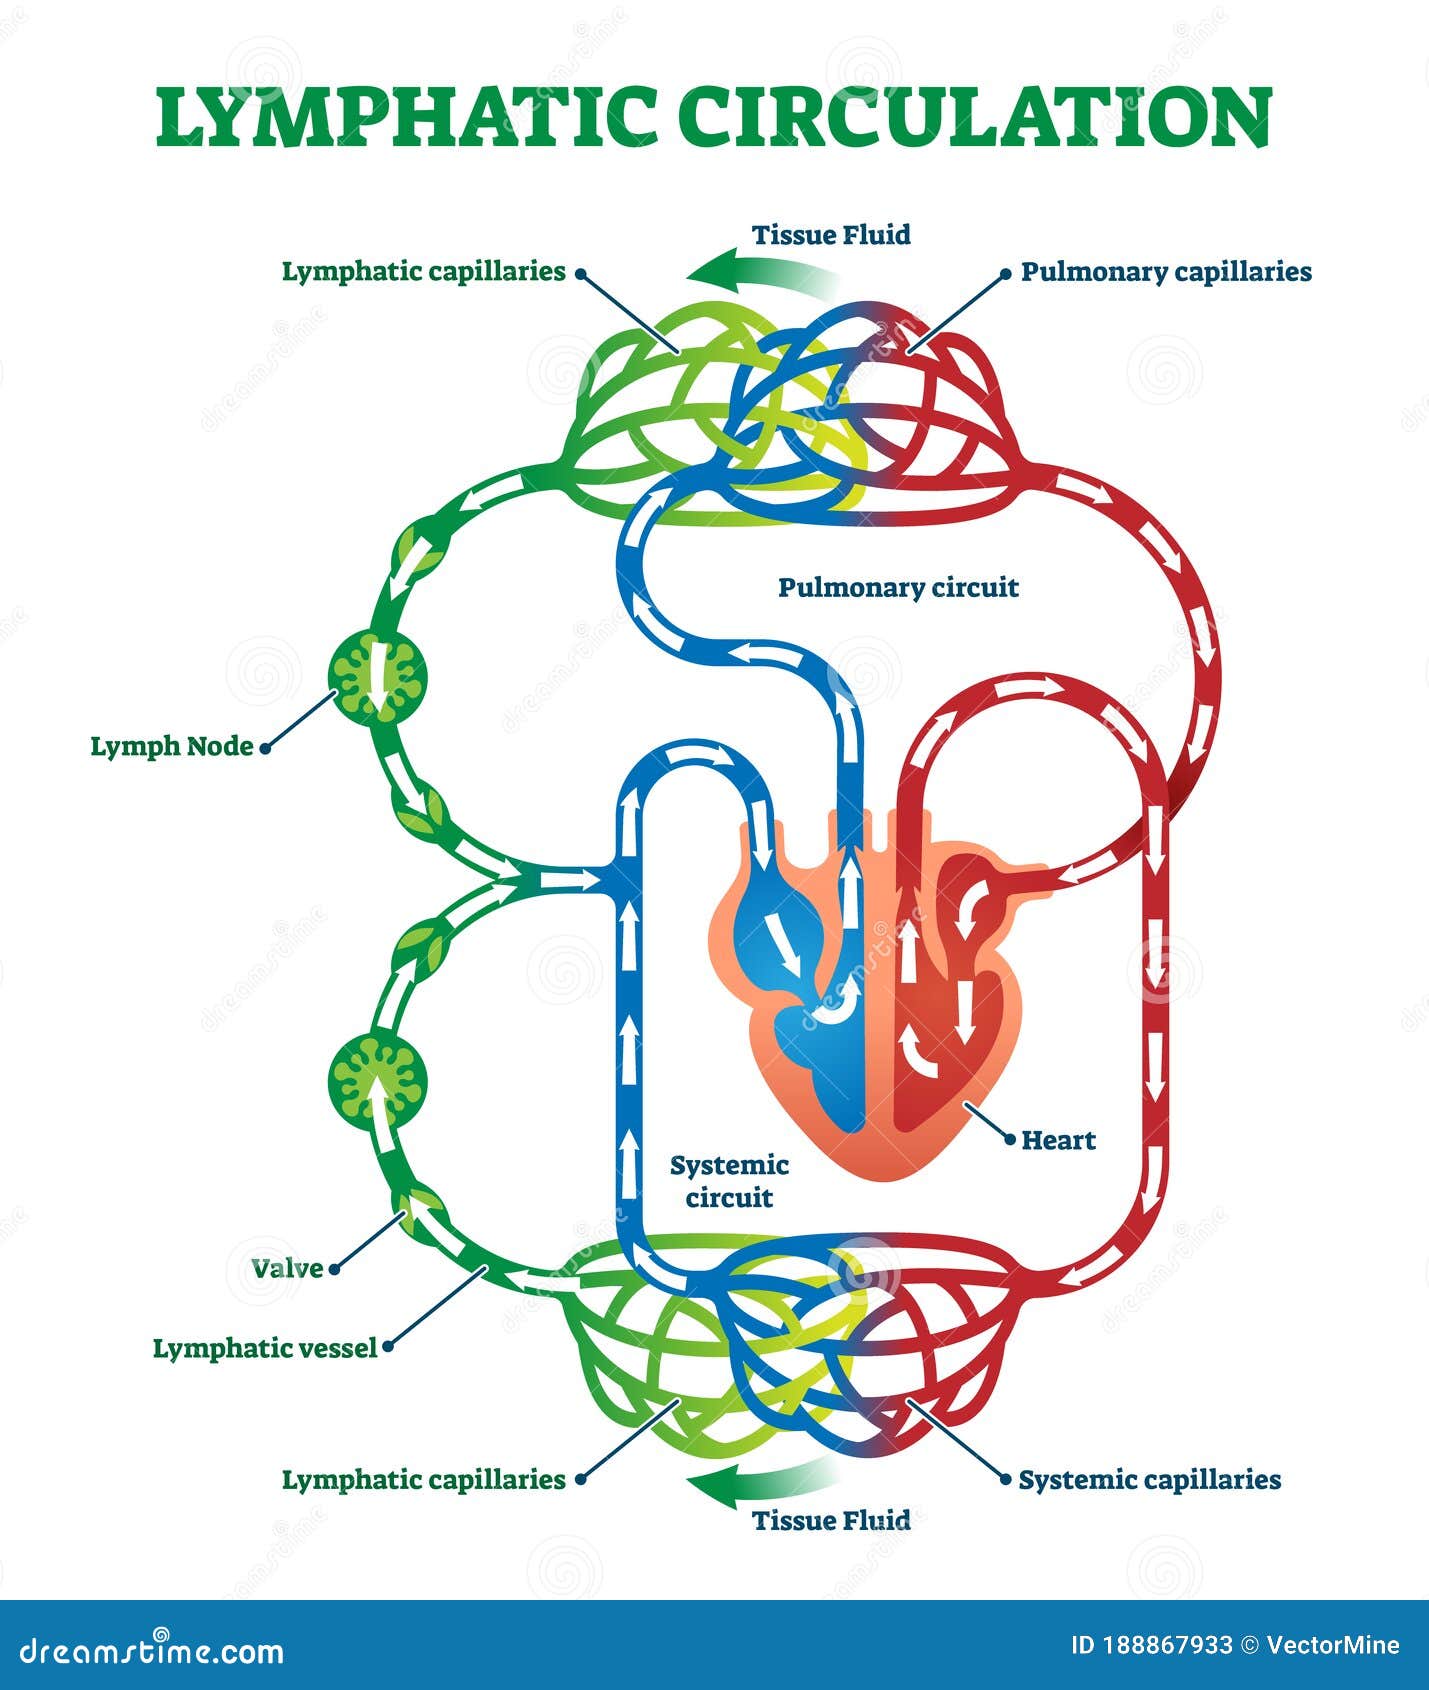 lymphatic circulation system with lymph transportation  .